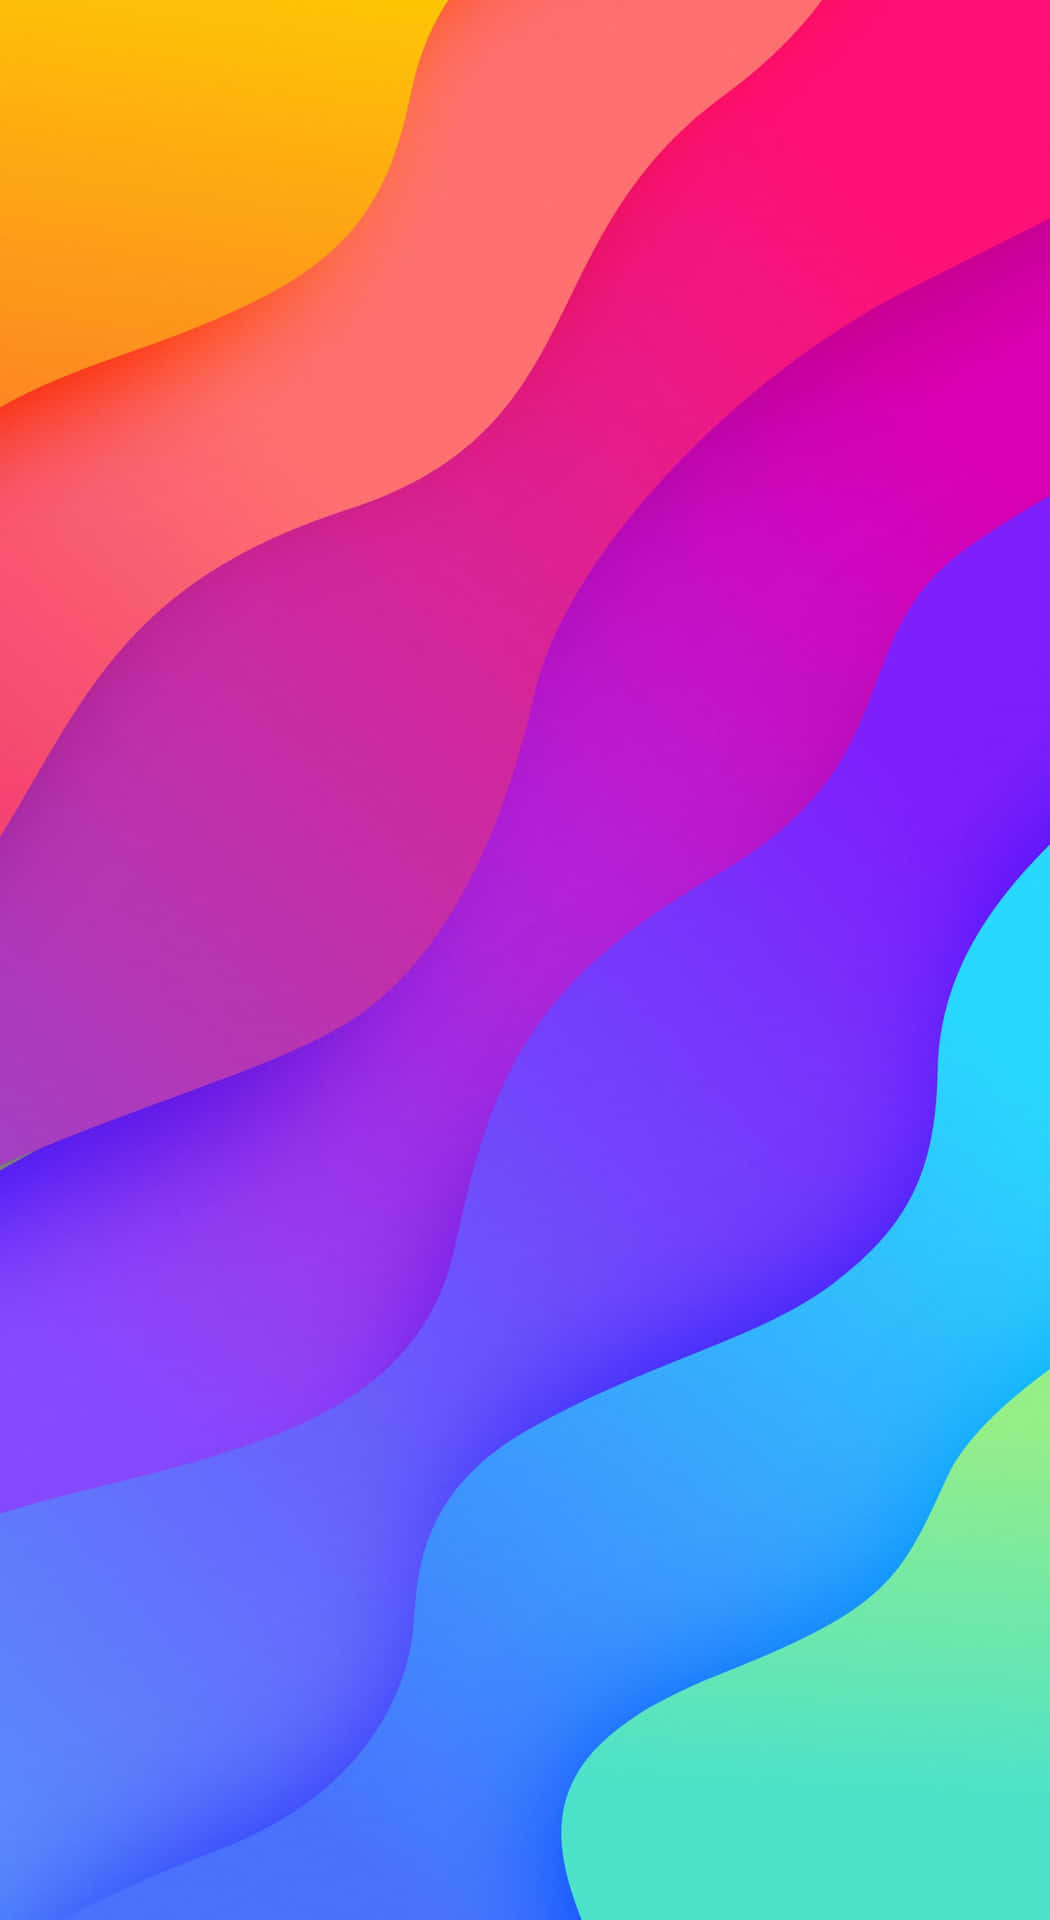 Free Rainbow Iphone Wallpaper Downloads, [100+] Rainbow Iphone Wallpapers  for FREE 